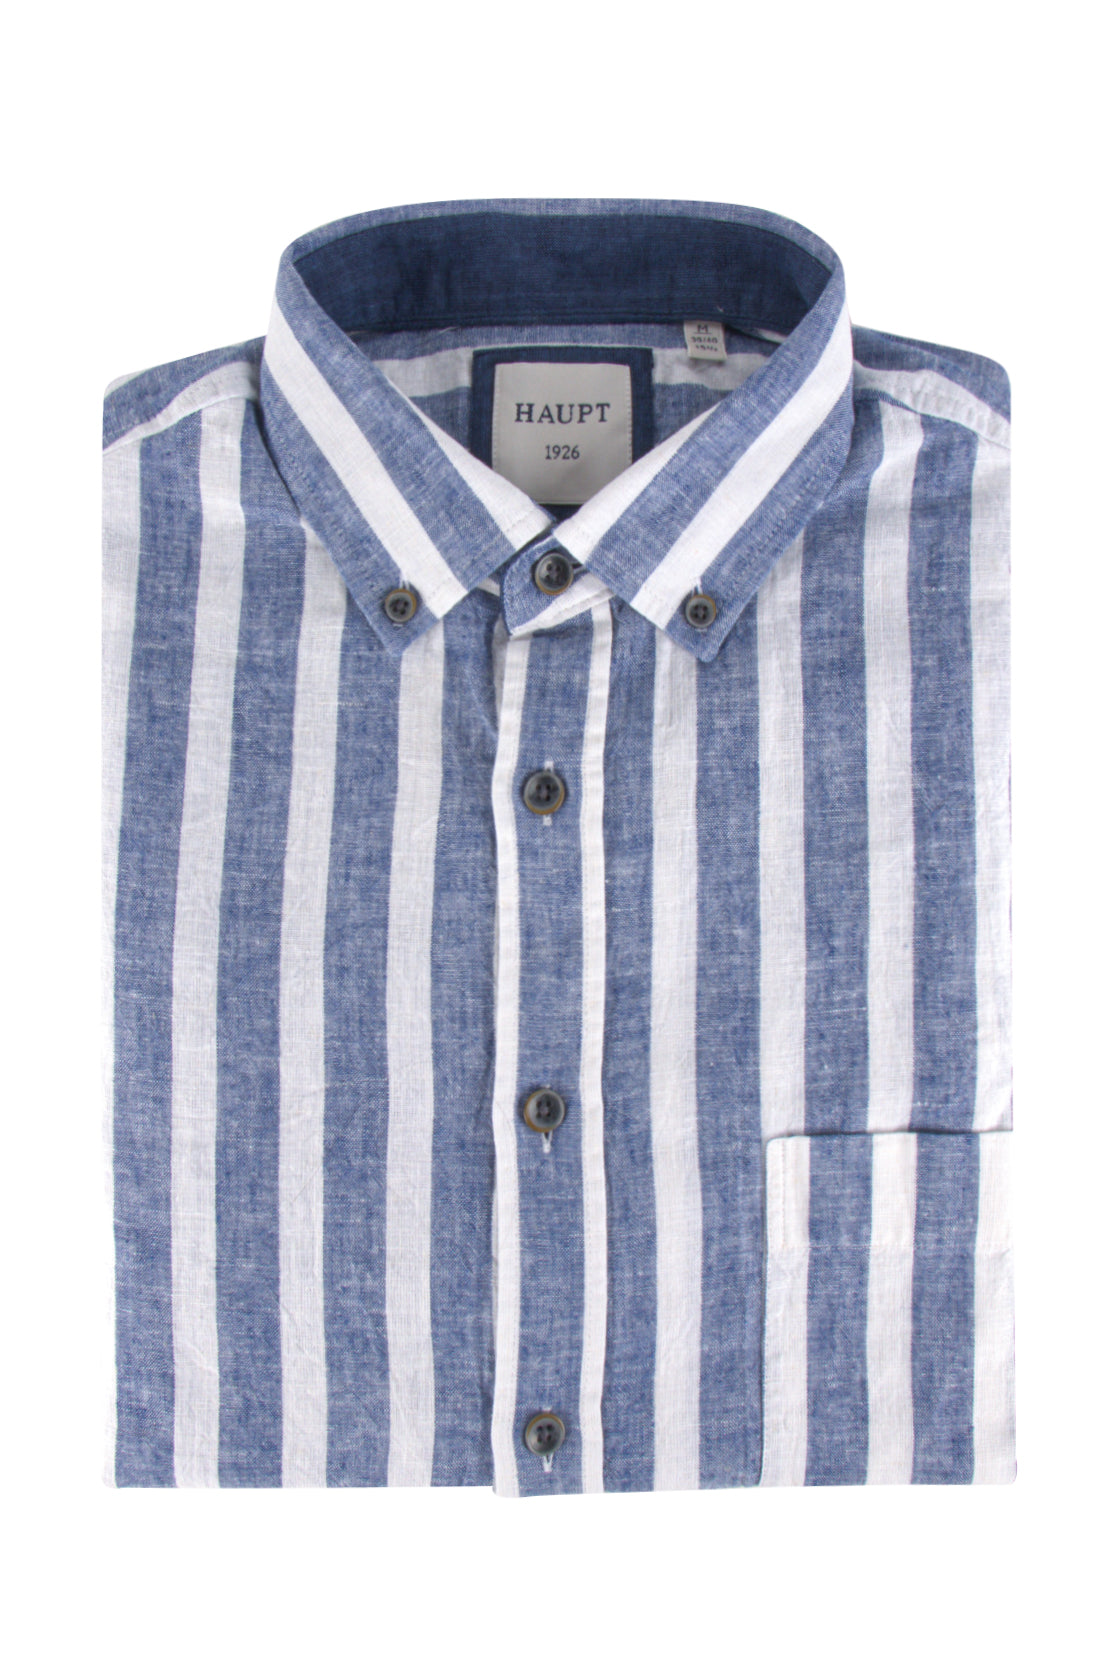 Haupt LS Linen Shirt Bold Stripe